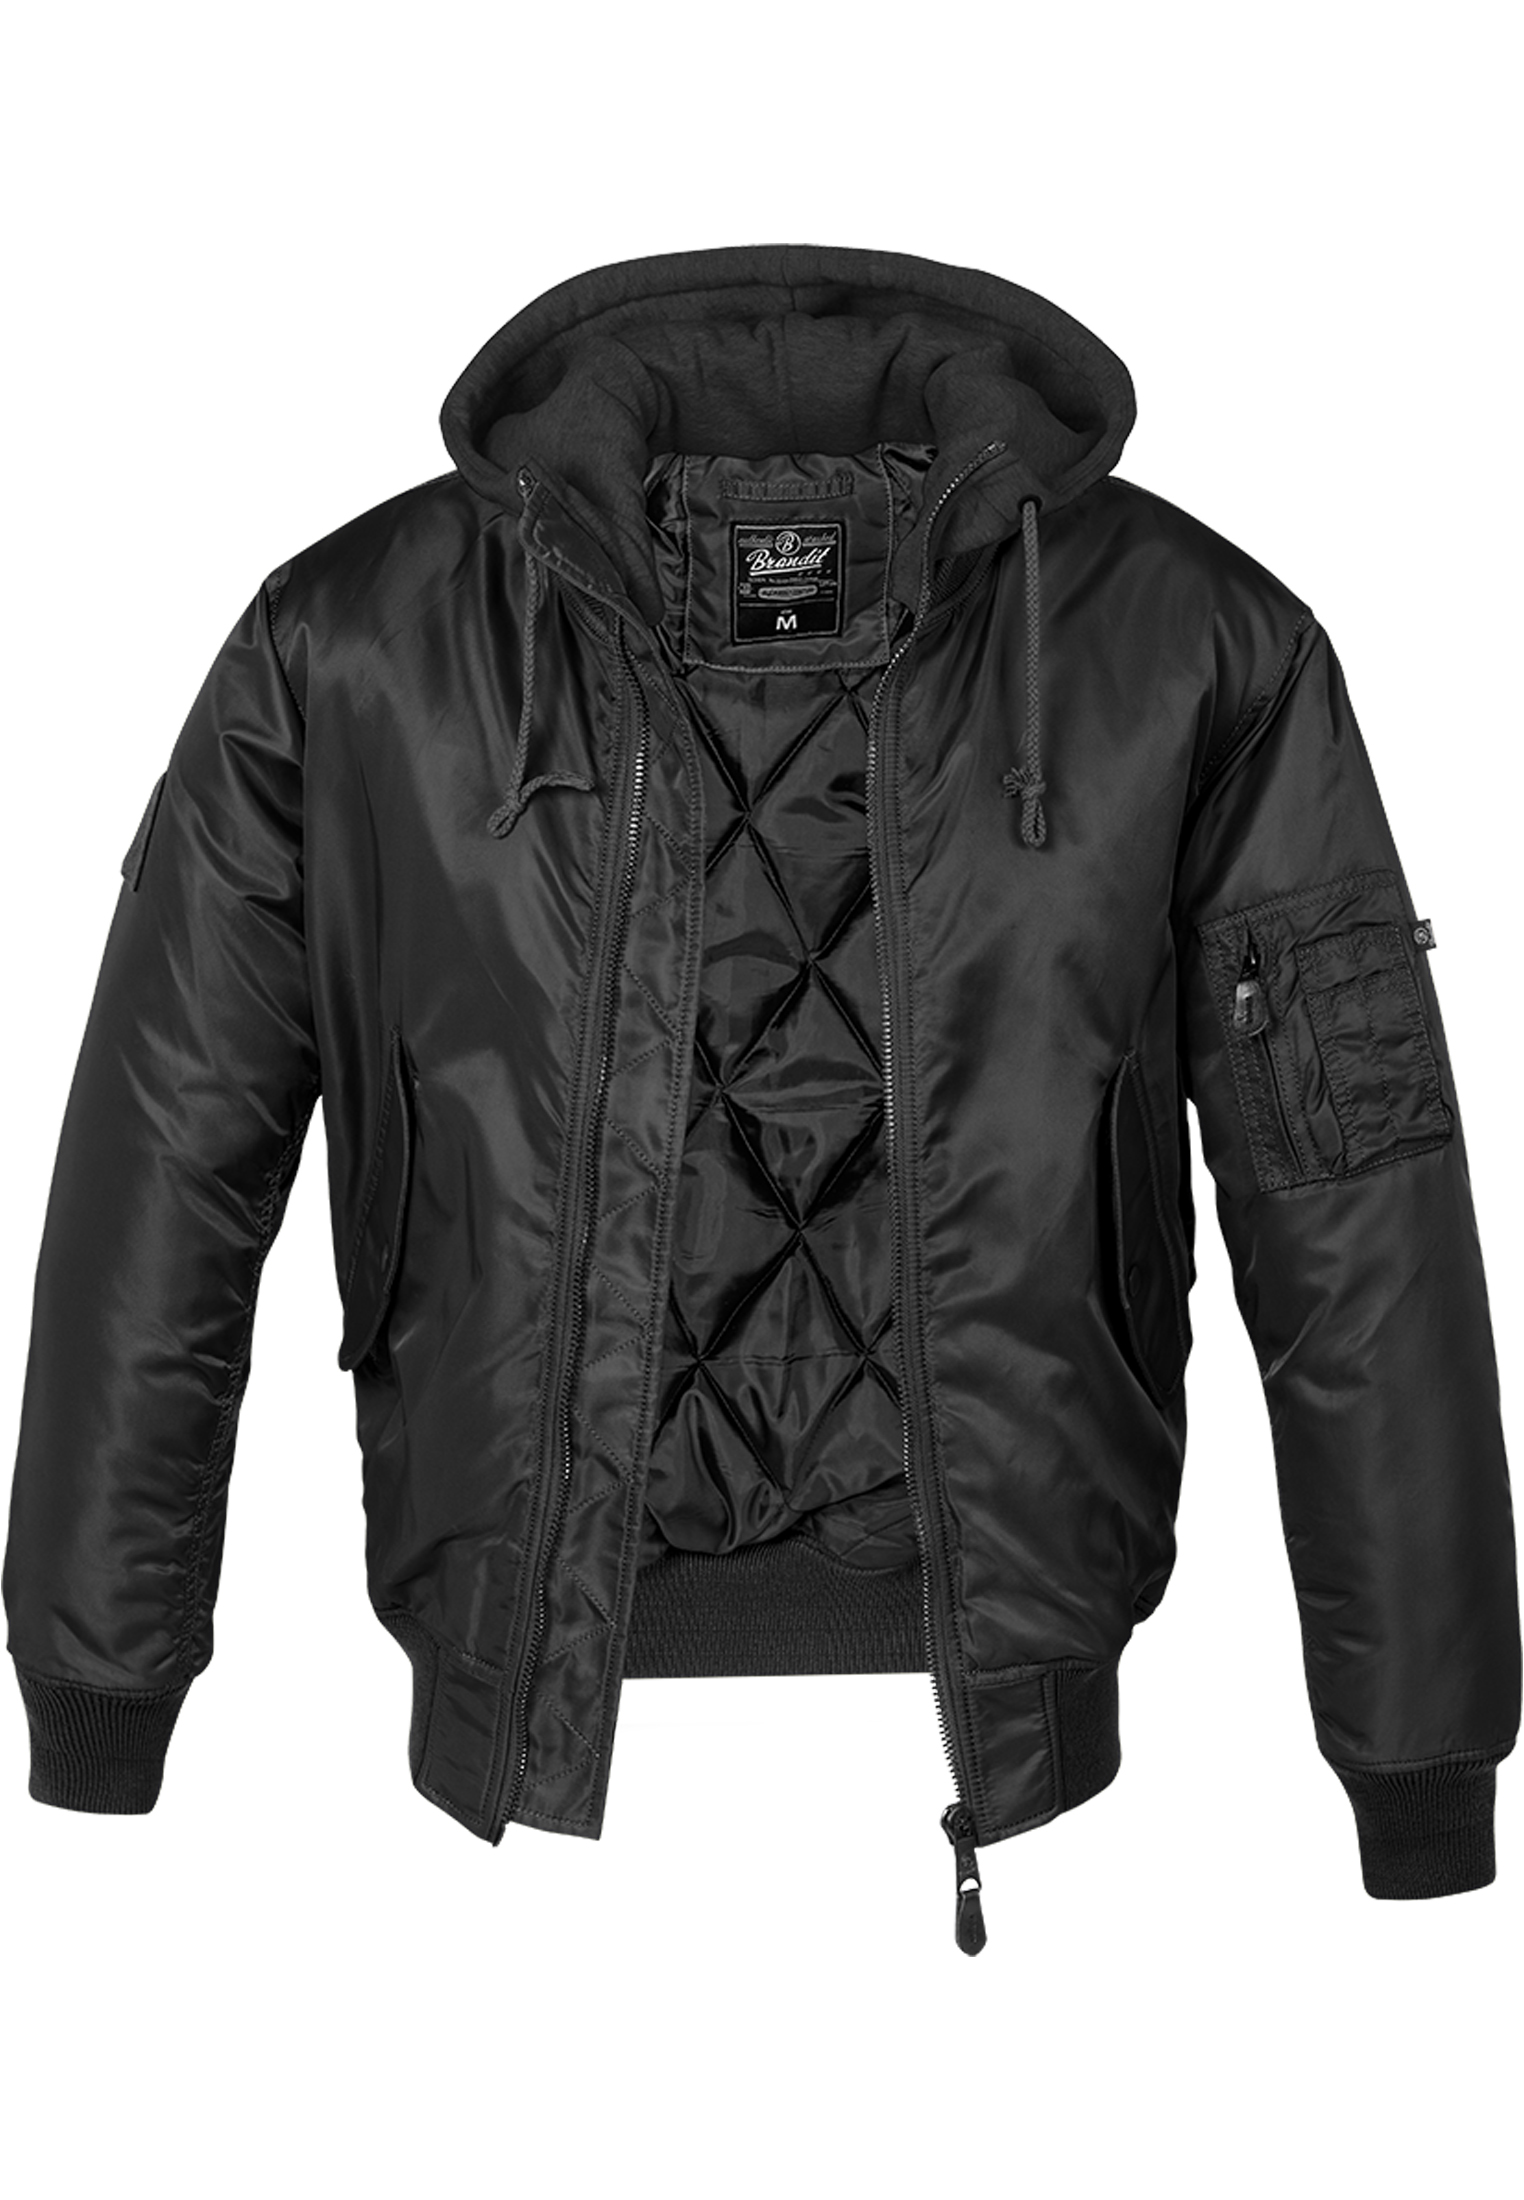 Jacken Hooded MA1 Bomber Jacket in Farbe black